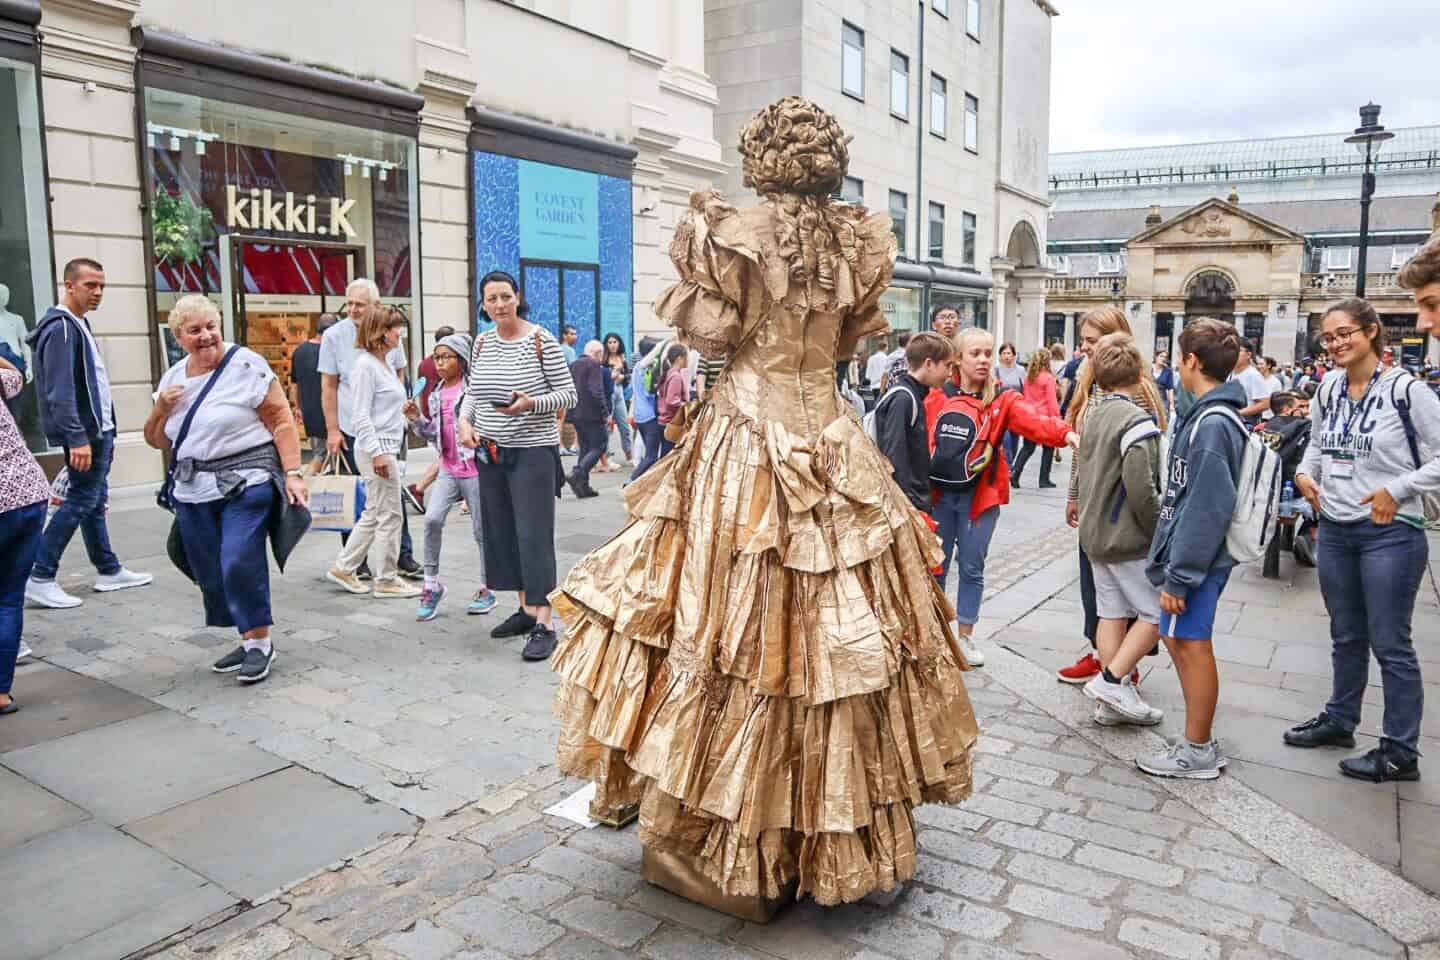 covent garden women street performer in dress covered in gold | covent garden london guide